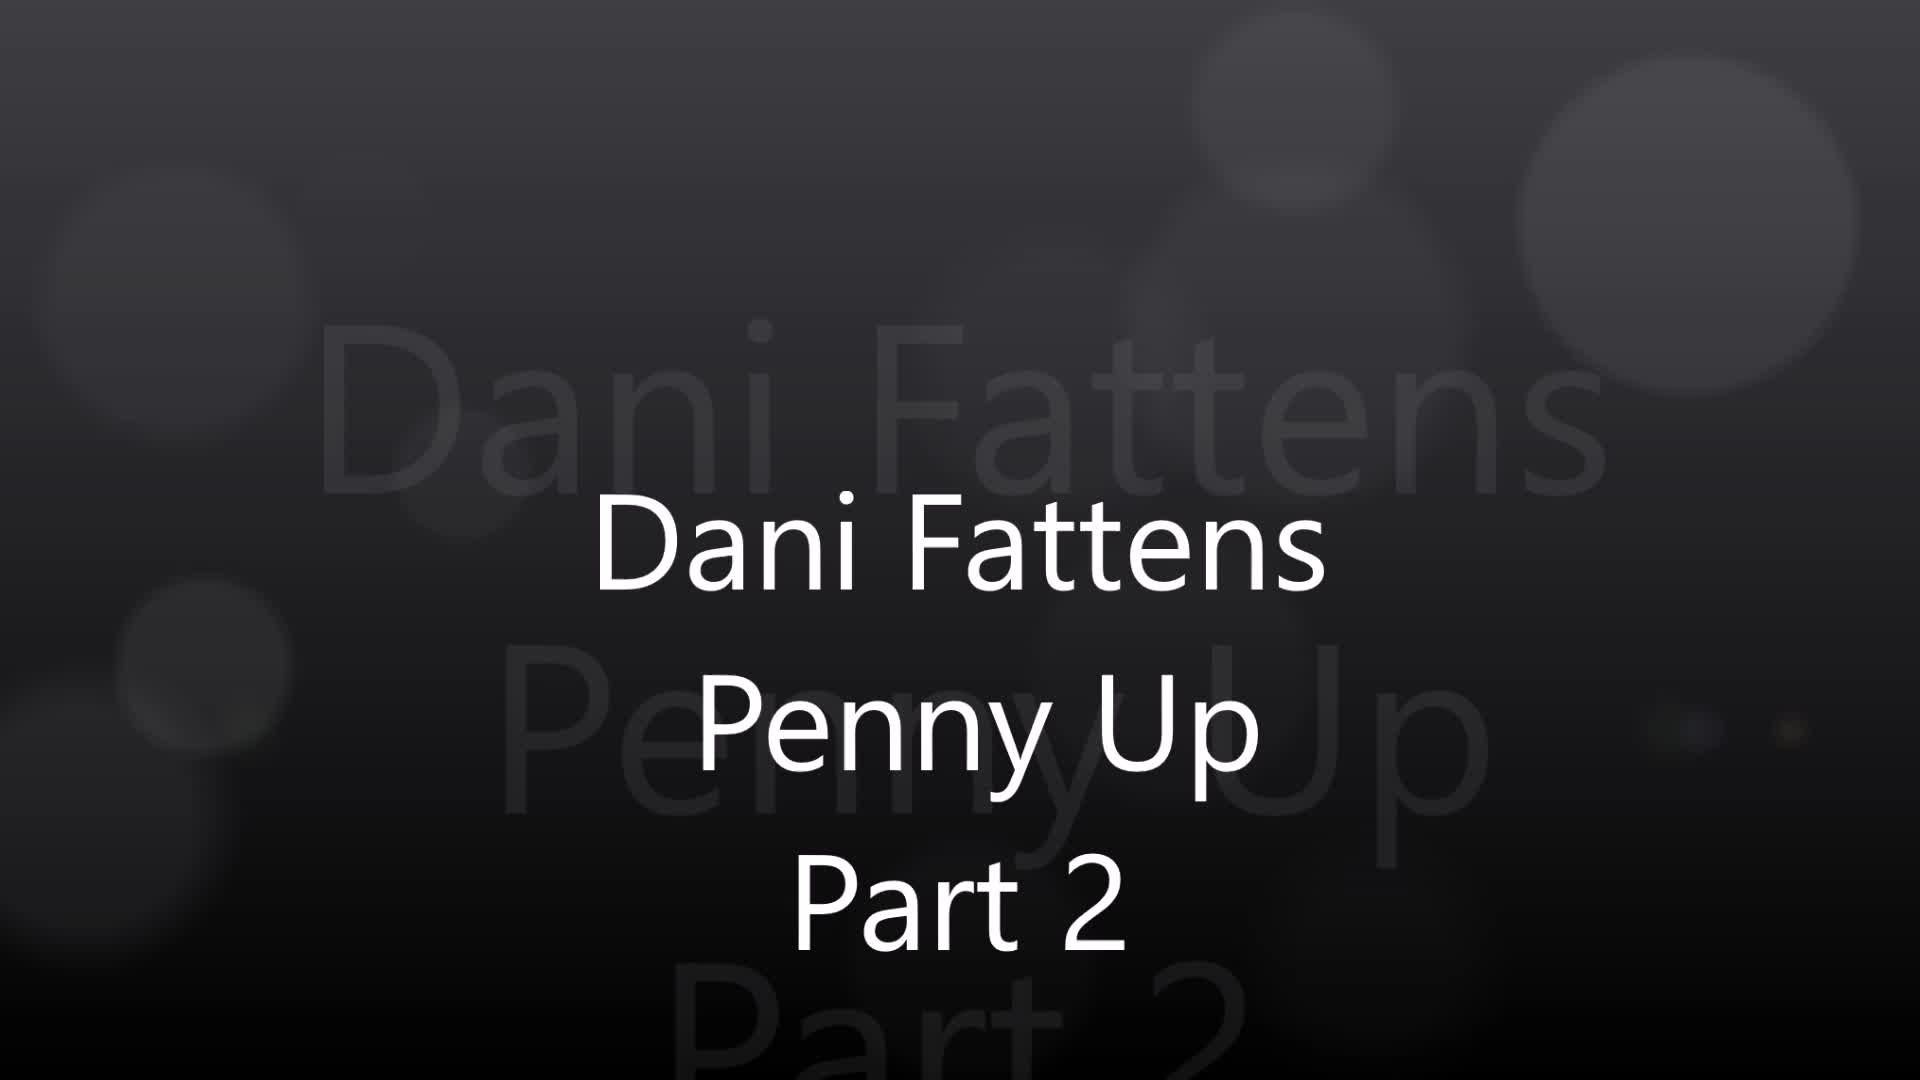 Dani Fattens Up Penny Part 2